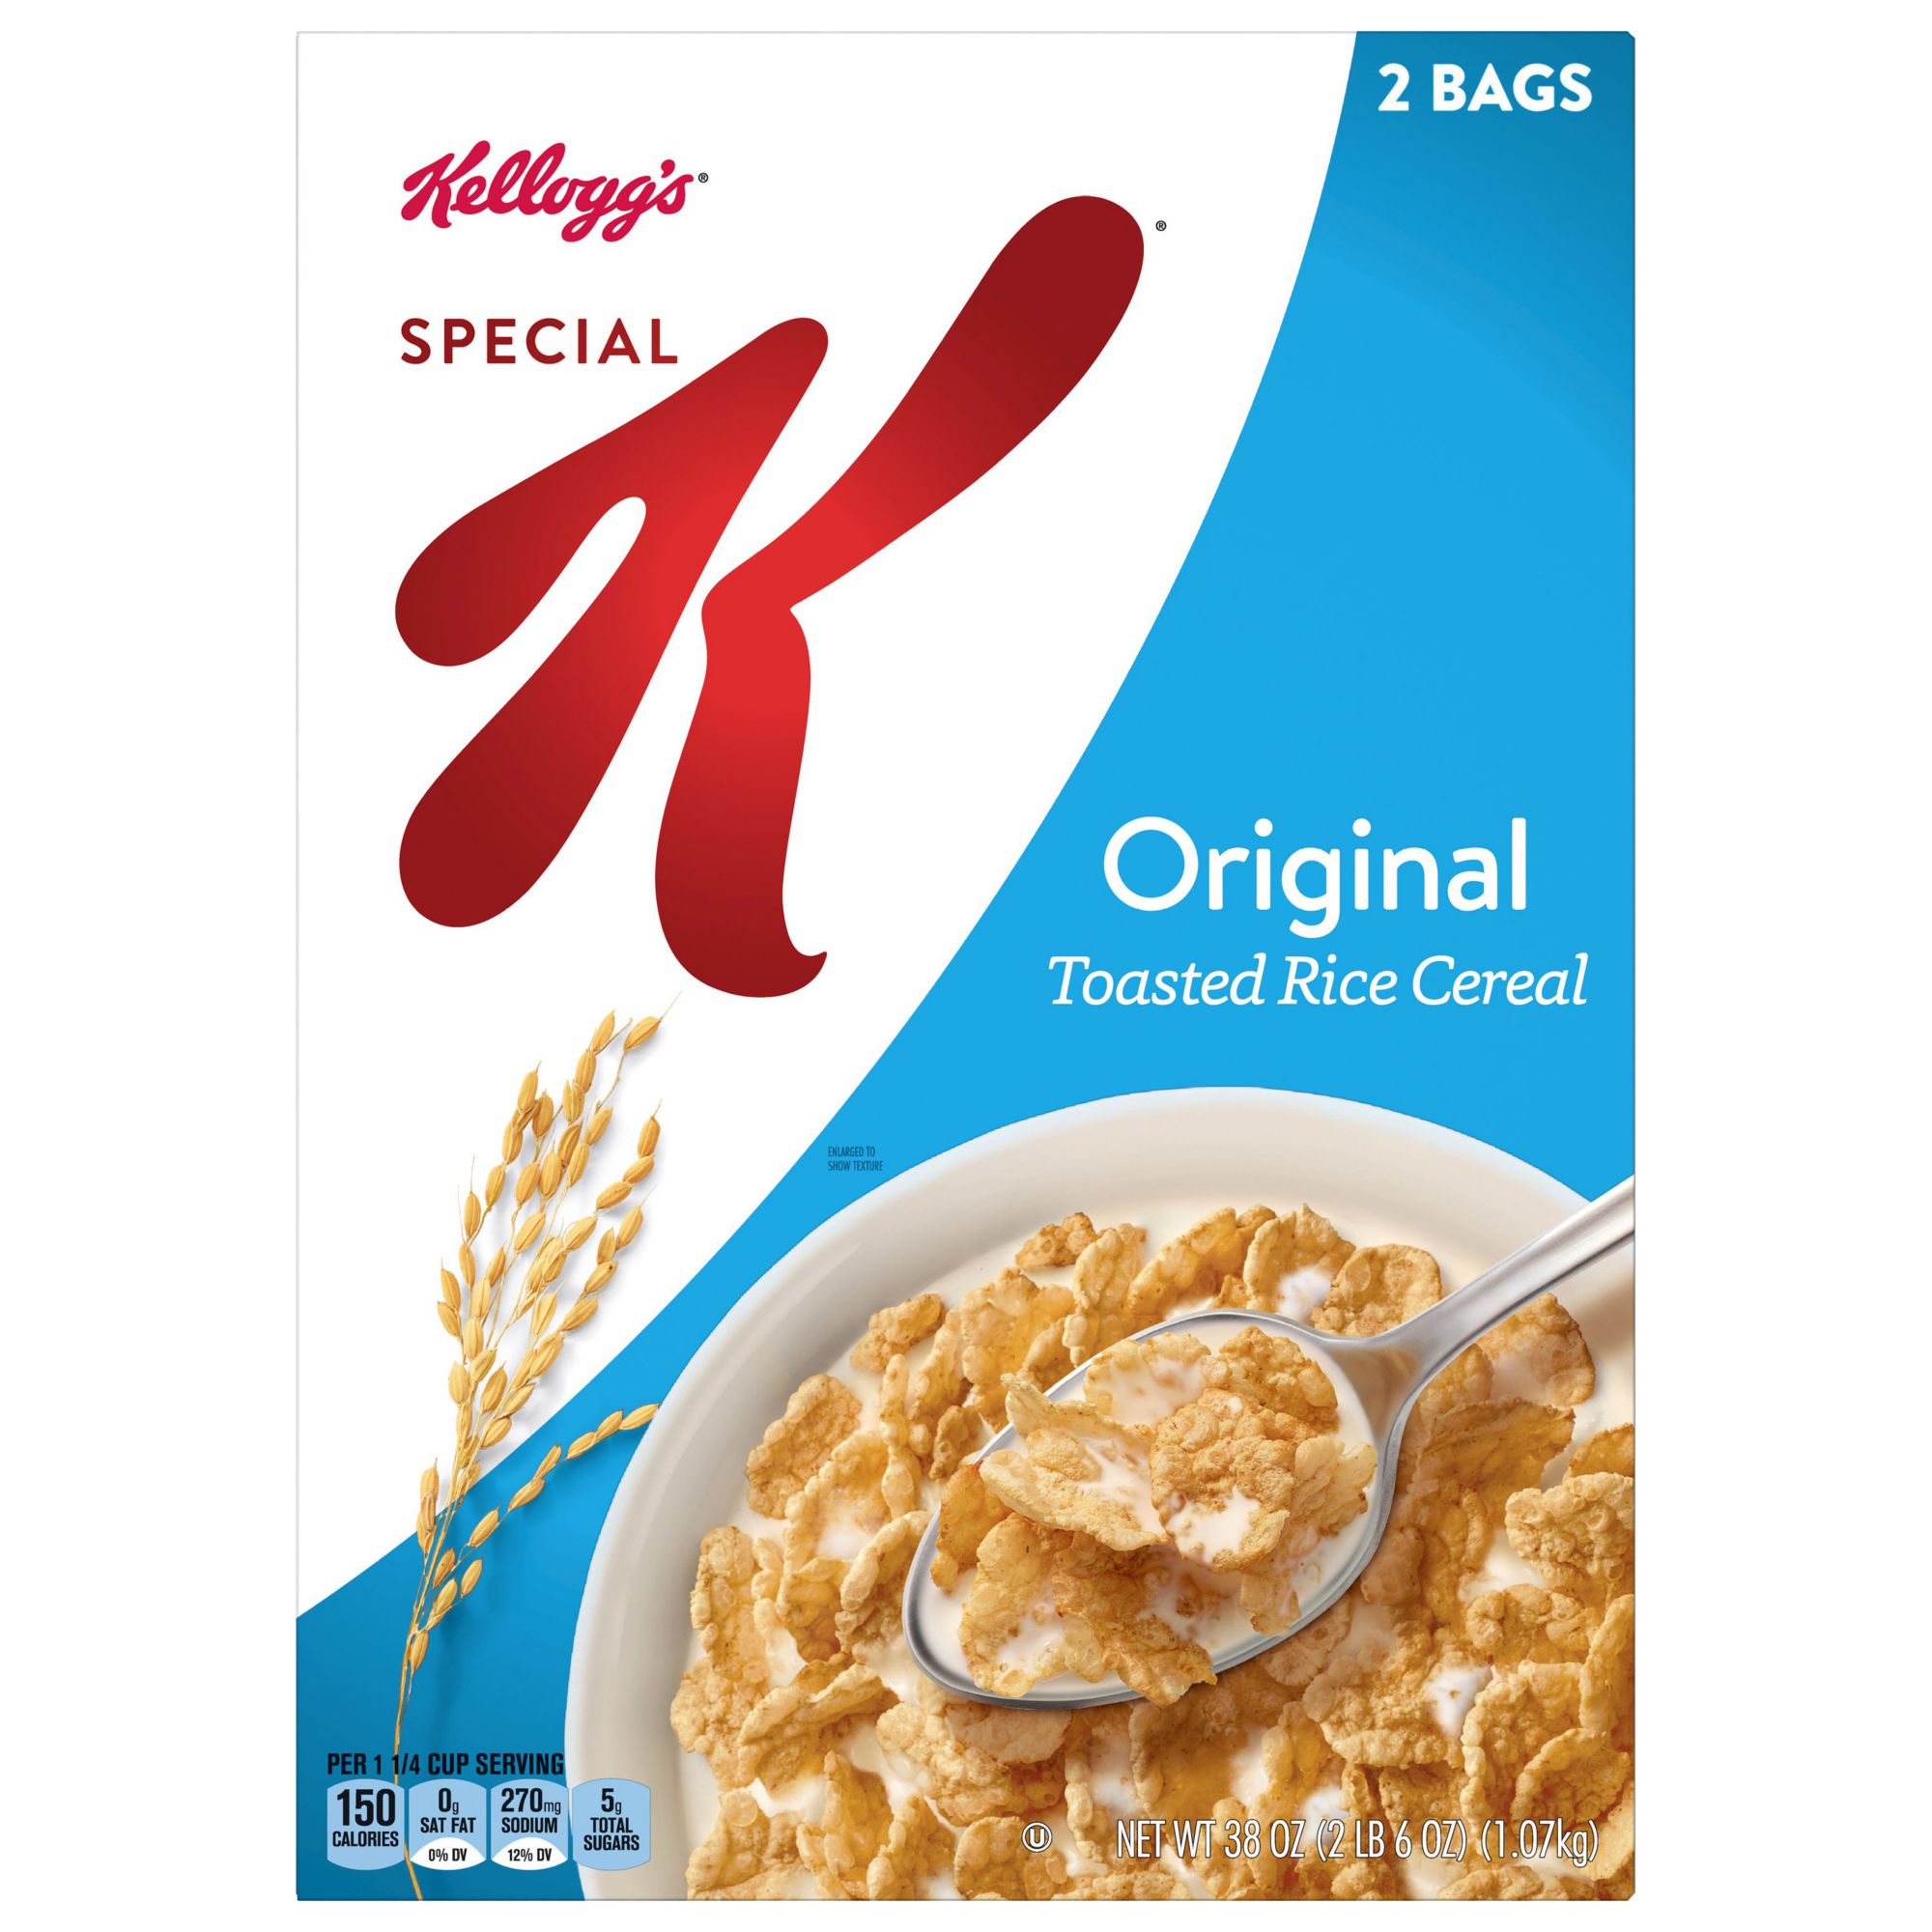 Kellogg's Corn Flakes Original Breakfast Cereal, Large Size, 12 oz Box